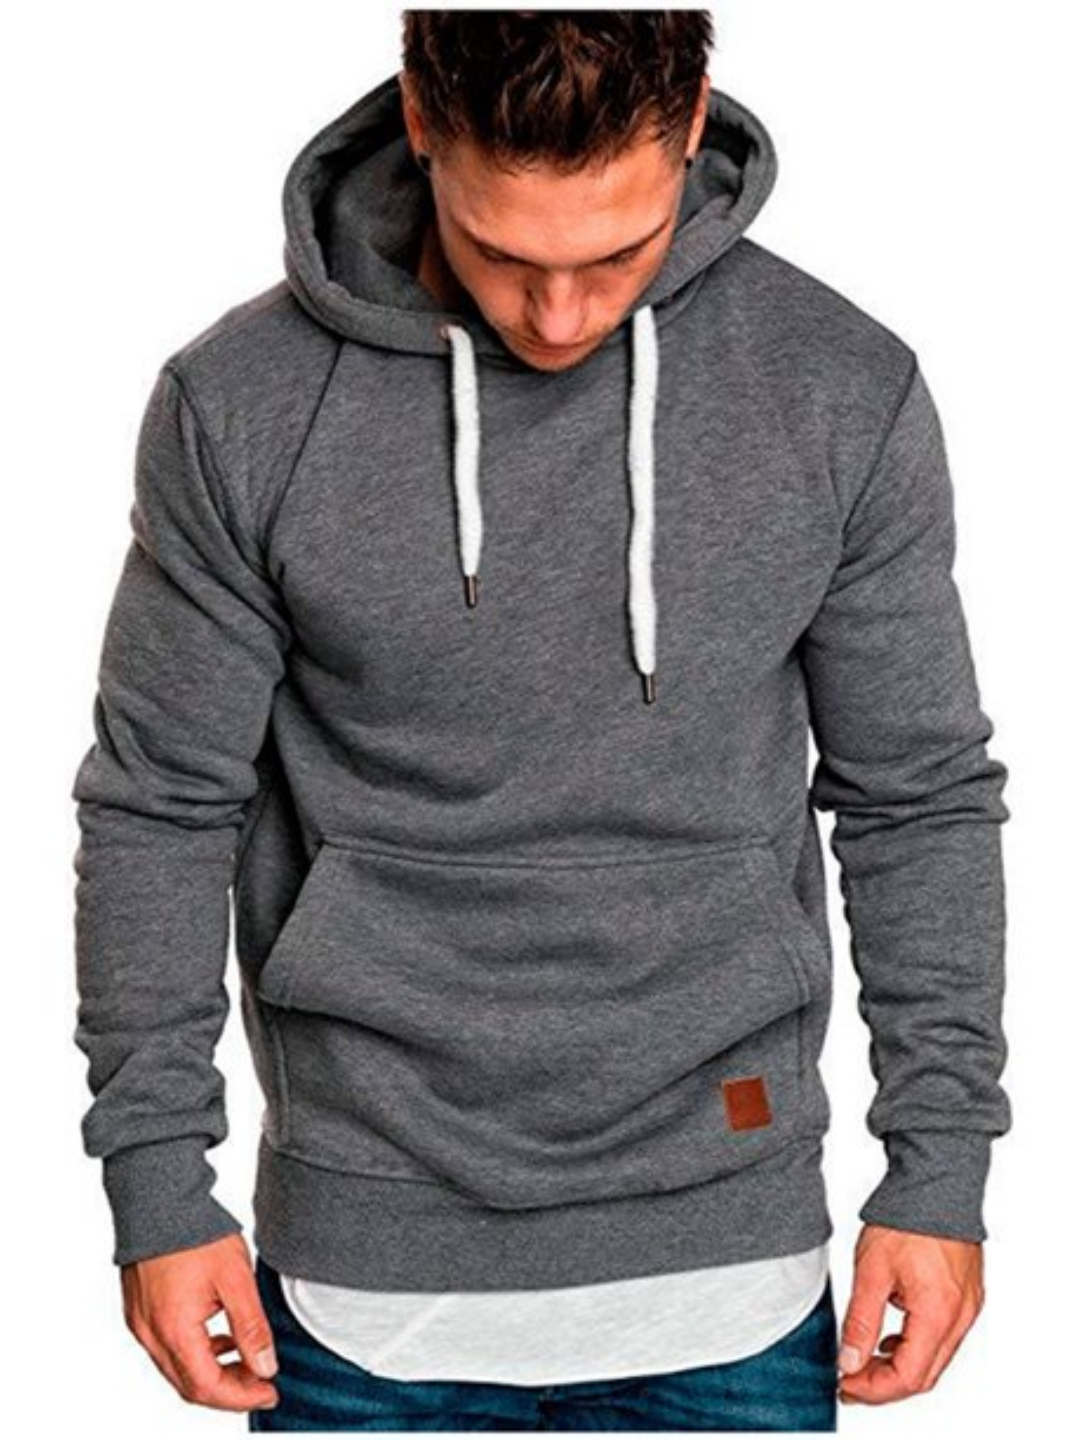 Men's Solid Color Athletic Hoodies Casual Sport Sweatshirt 